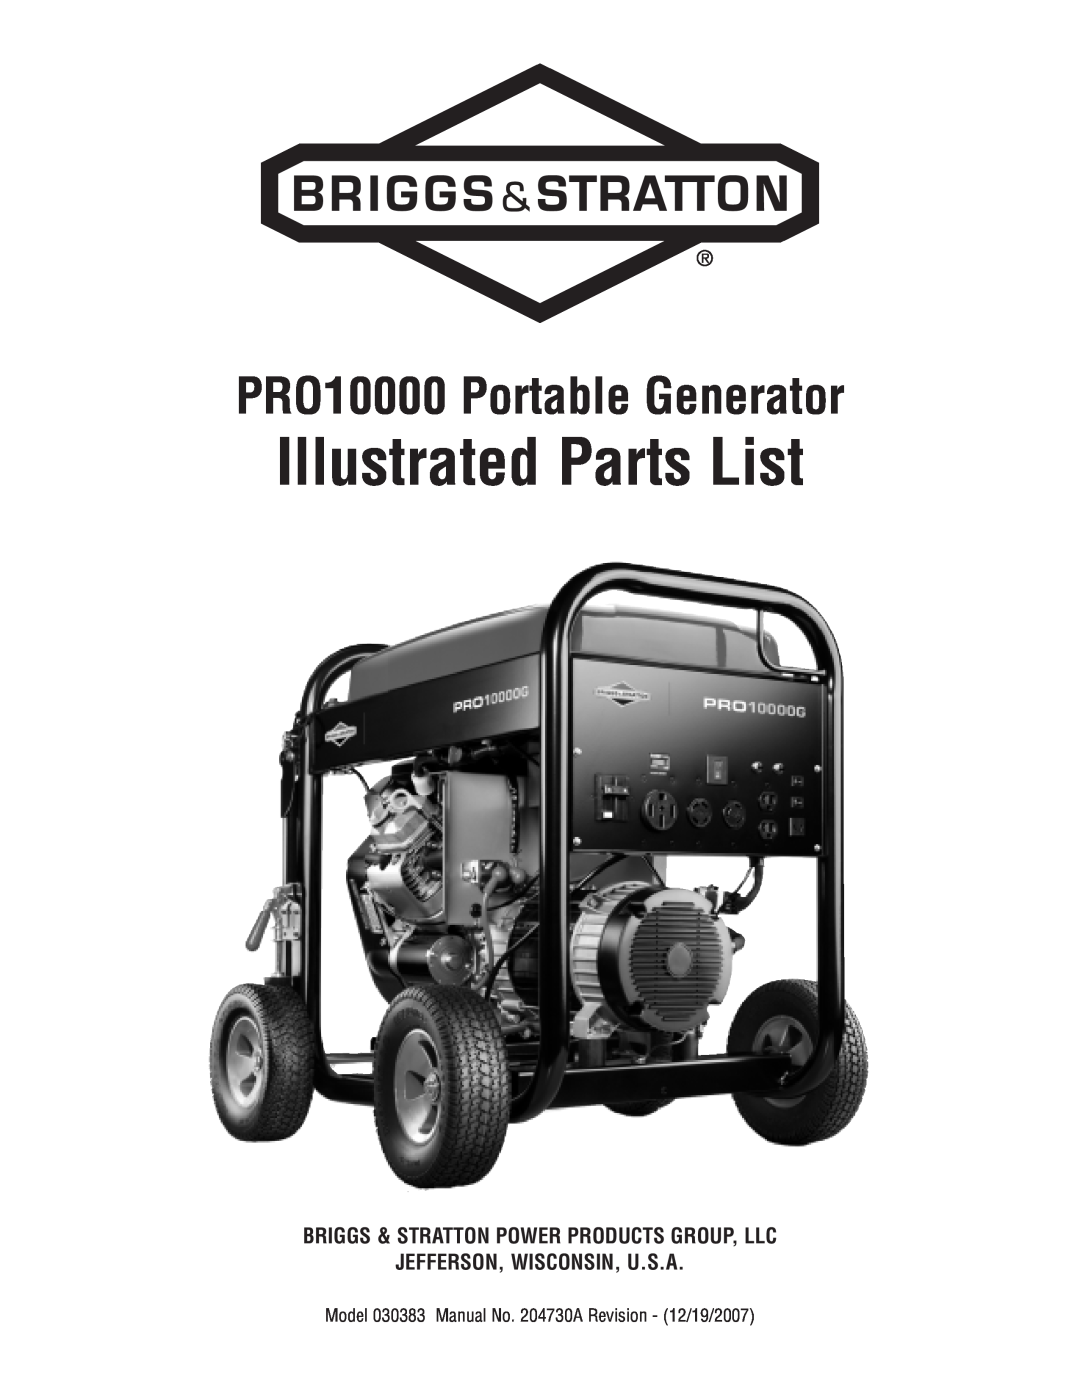 Briggs & Stratton PRO10000 030383 manual Illustrated Parts List, PRO10000 Portable Generator, Jefferson, Wisconsin, U.S.A 